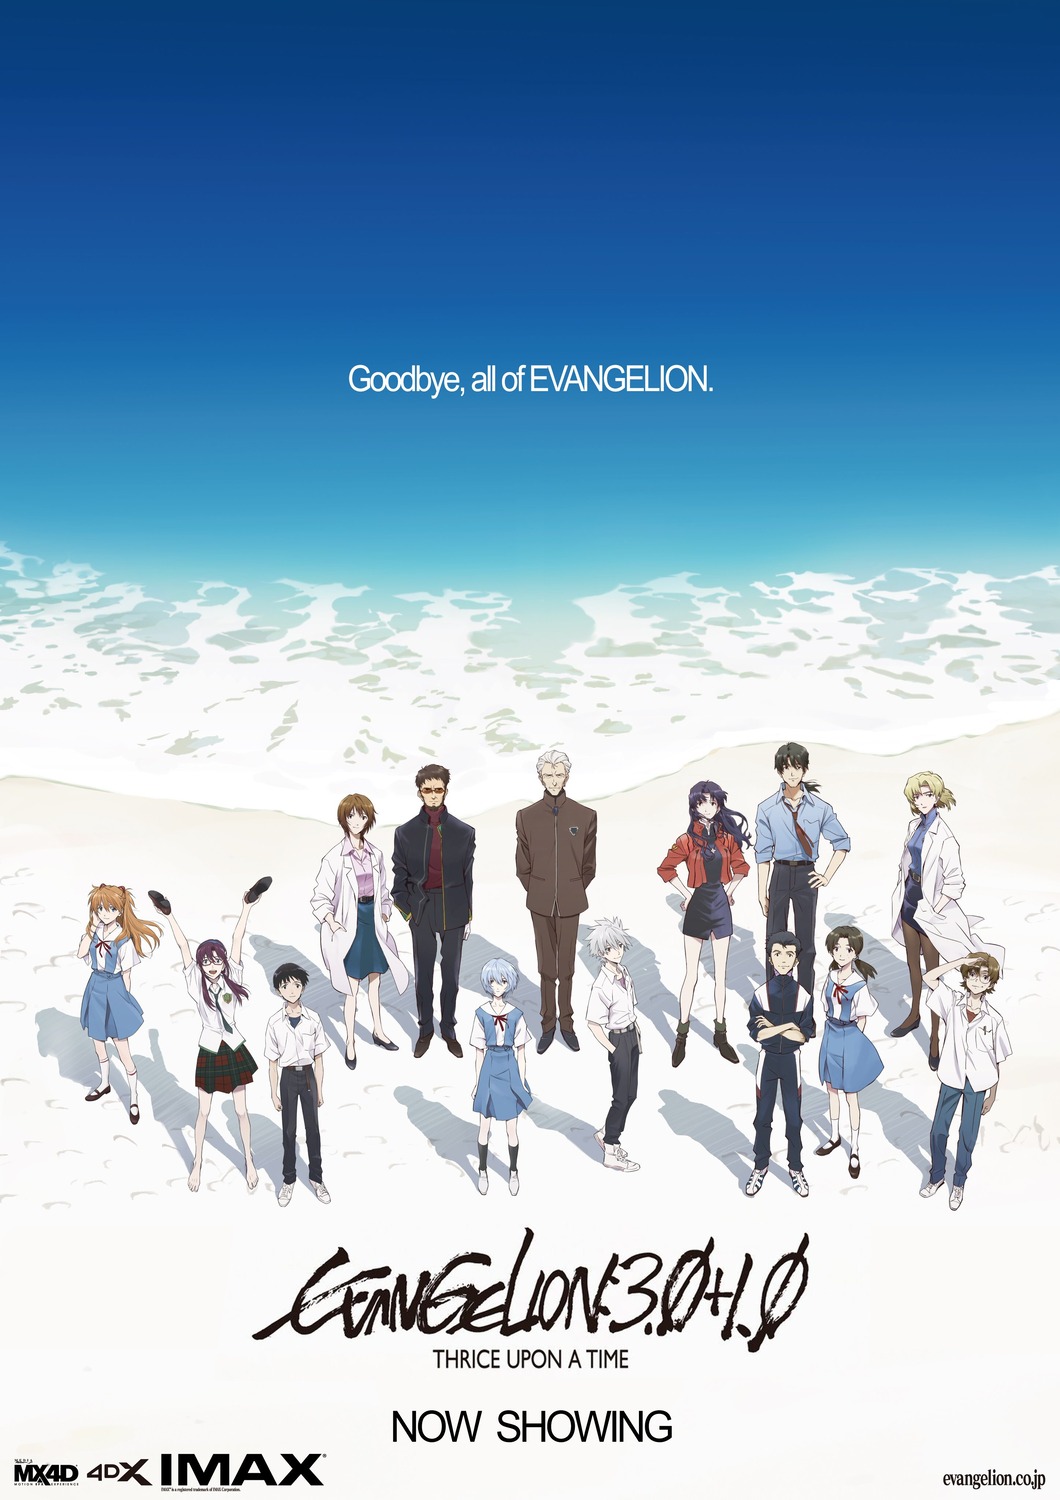 Extra Large Movie Poster Image for Evangerion shin gekijoban (#3 of 3)